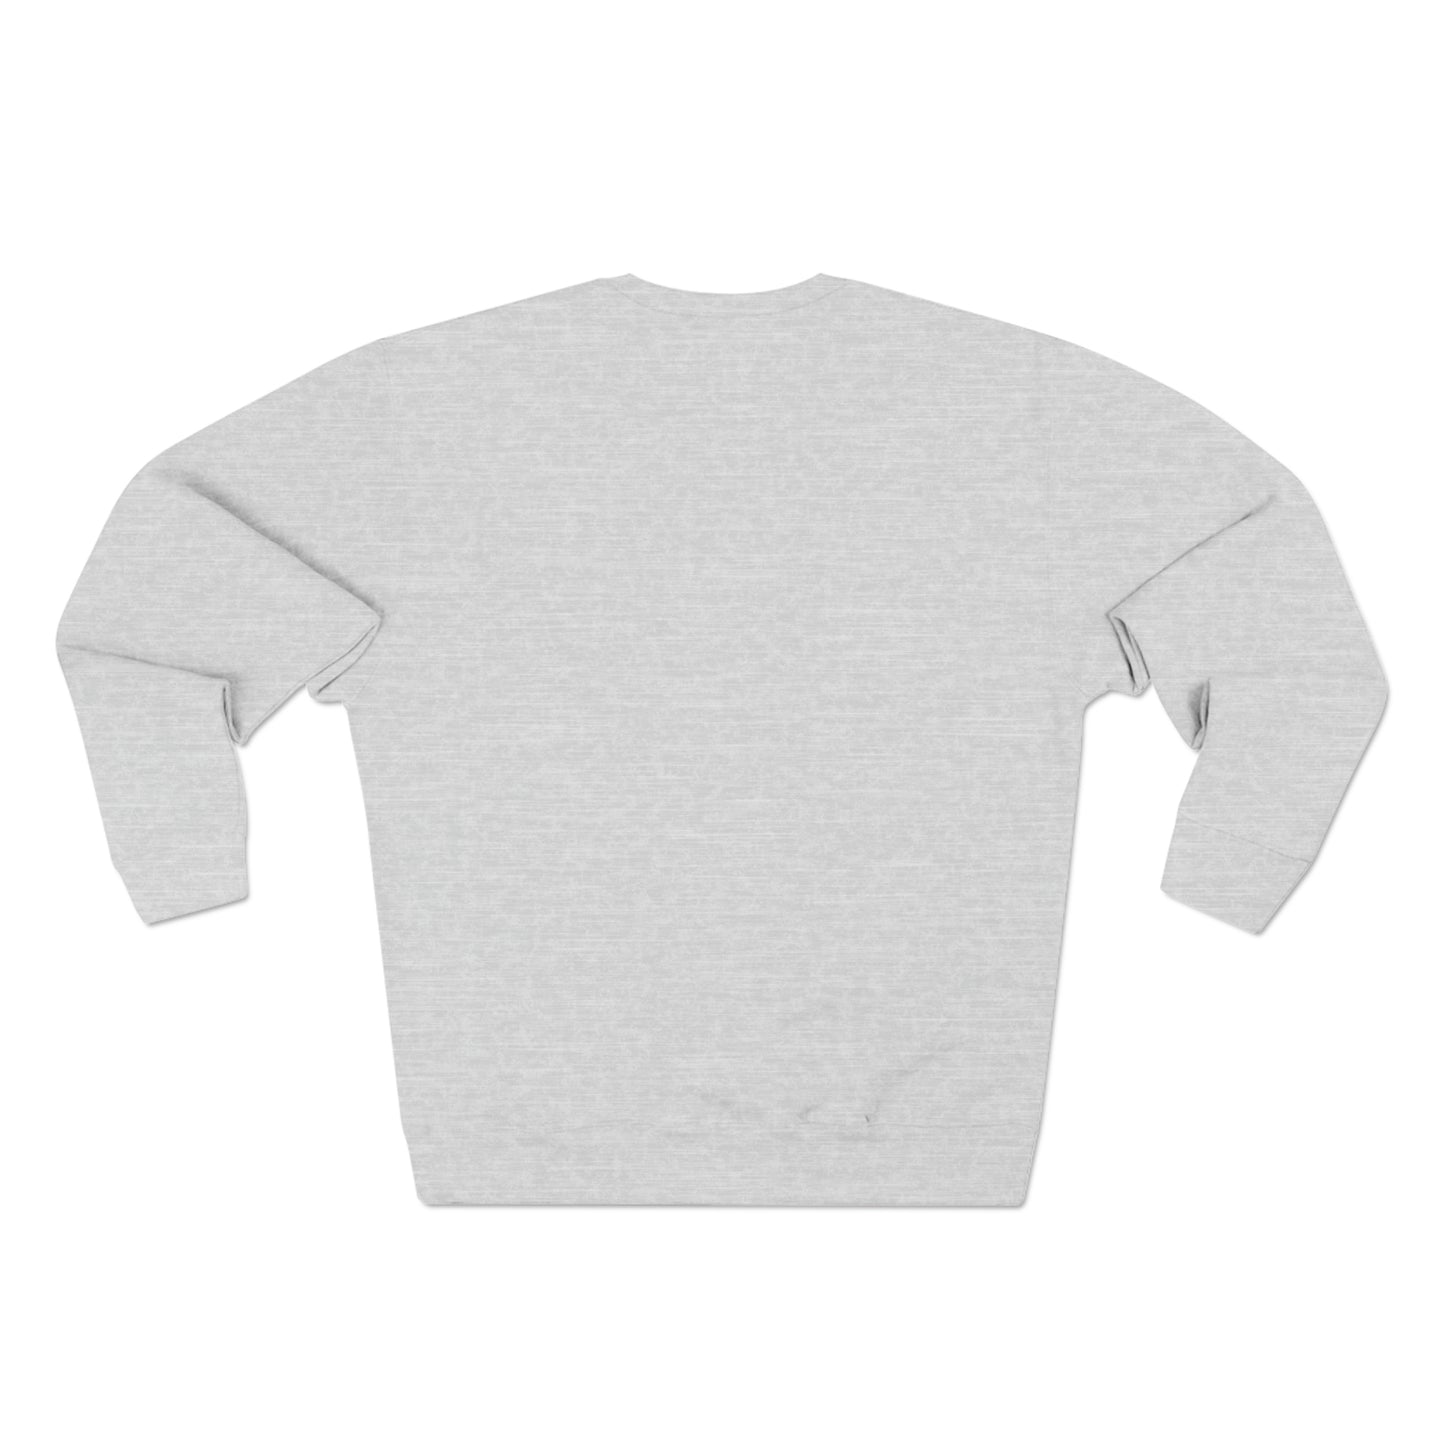 BG "Record Label" Premium Crewneck Sweatshirt